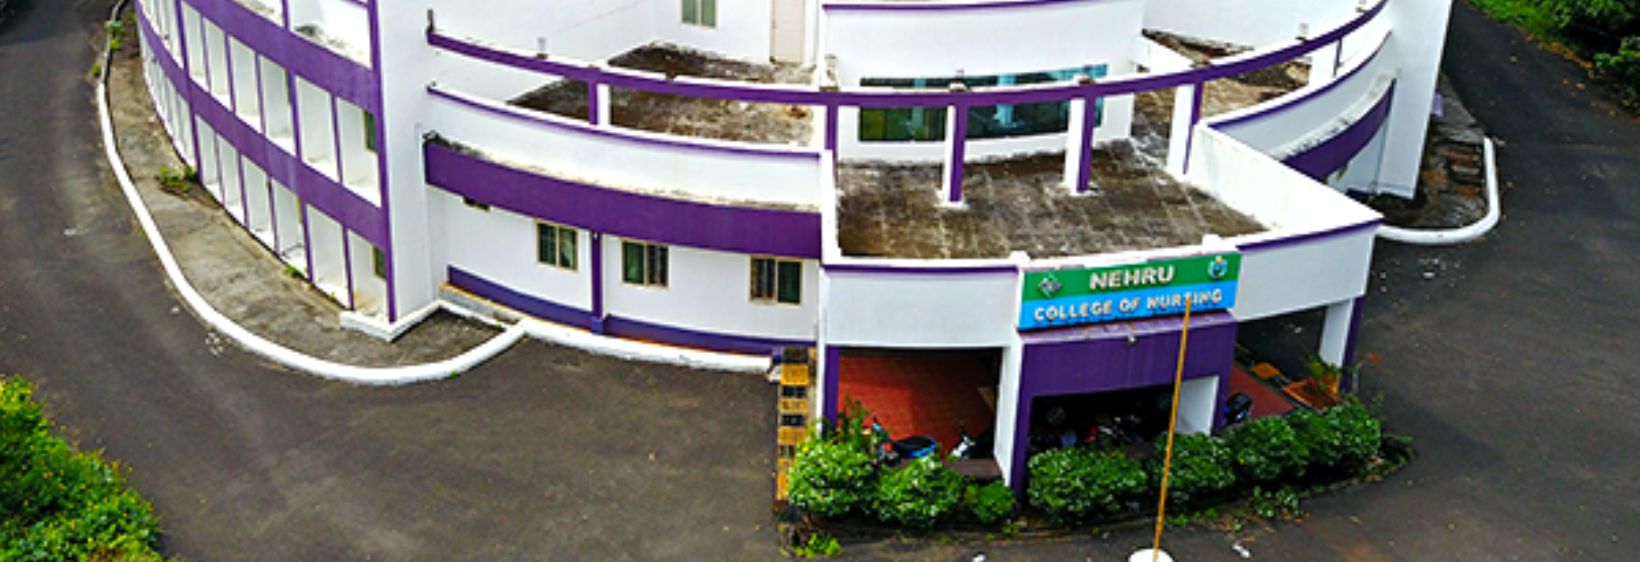 Nehru College of Nursing - Palakkad